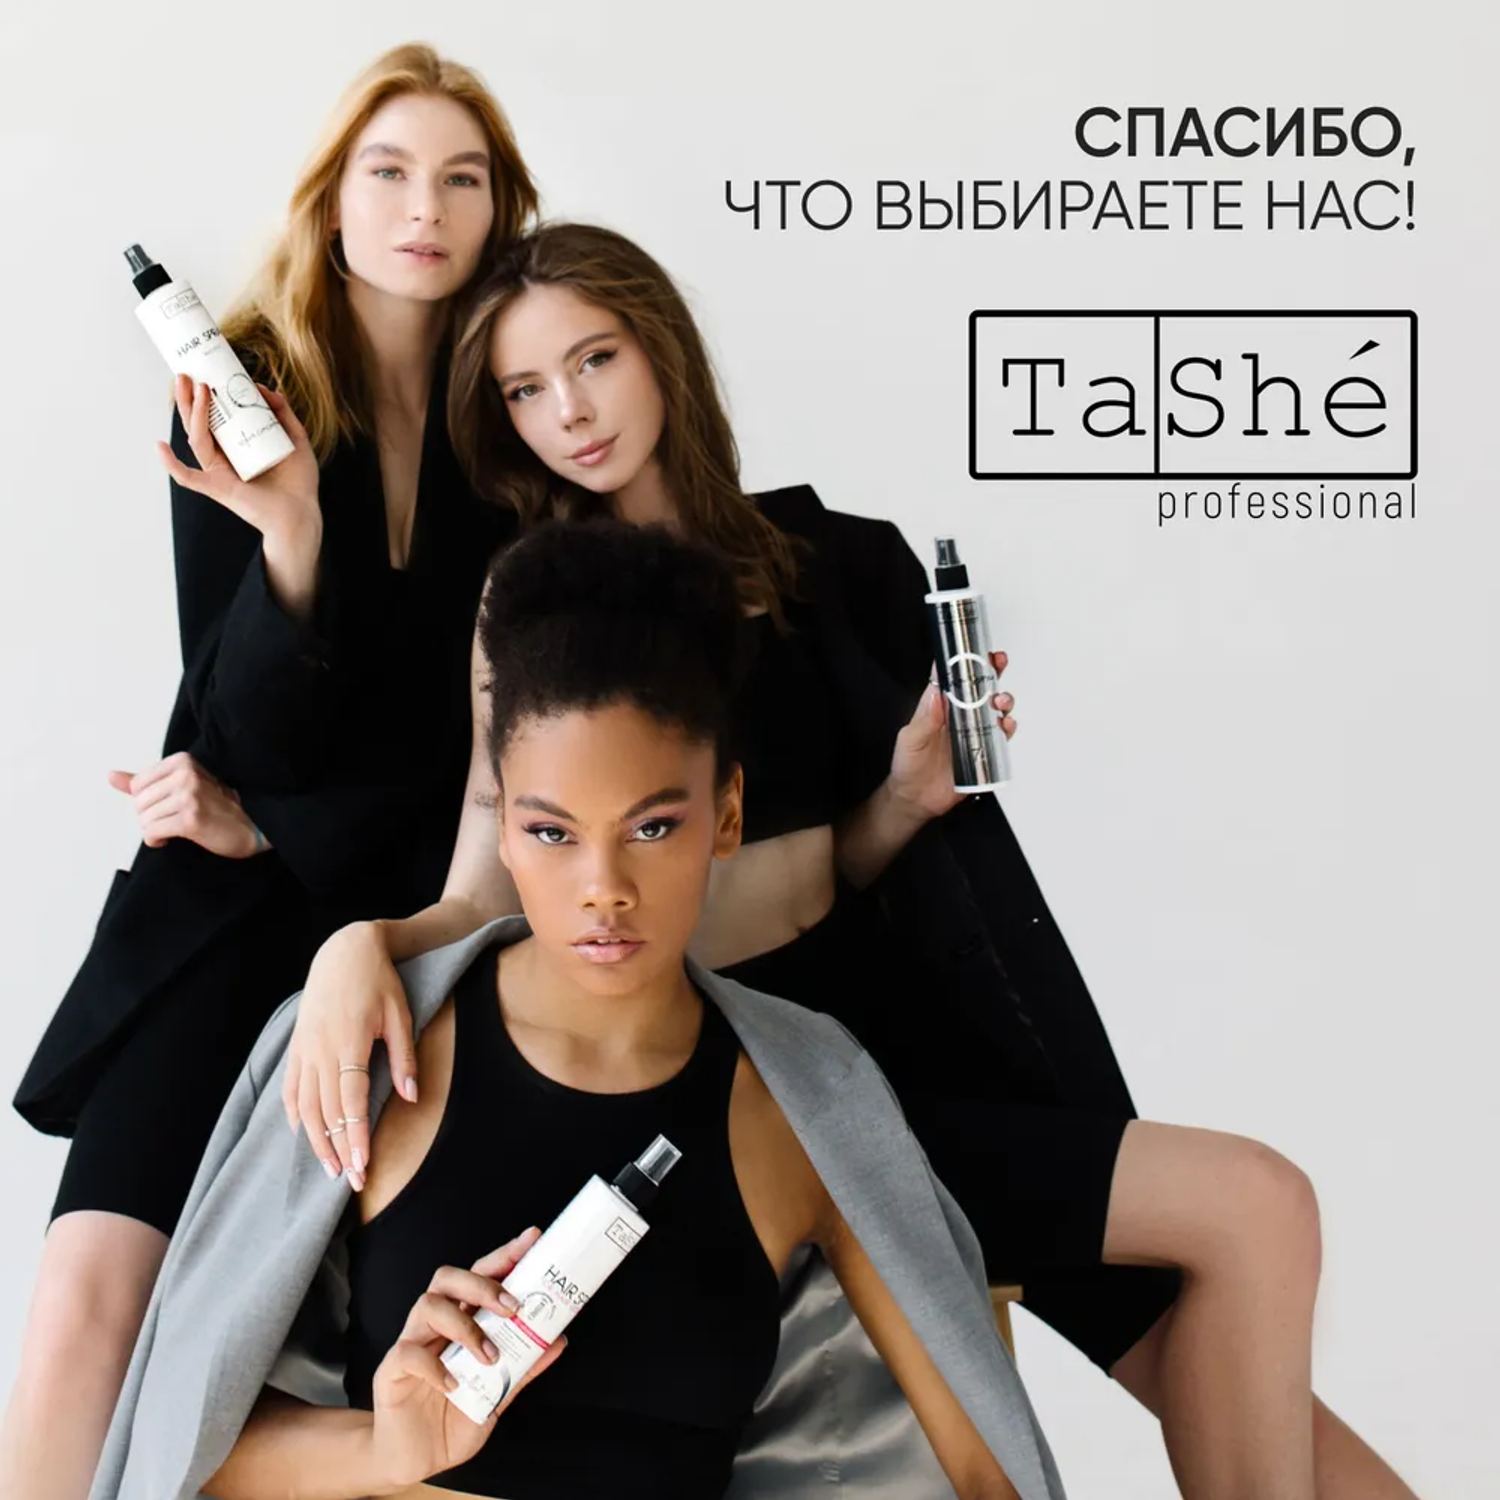 Масло для кончиков волос Tashe Professional против сечения термозащита - фото 7